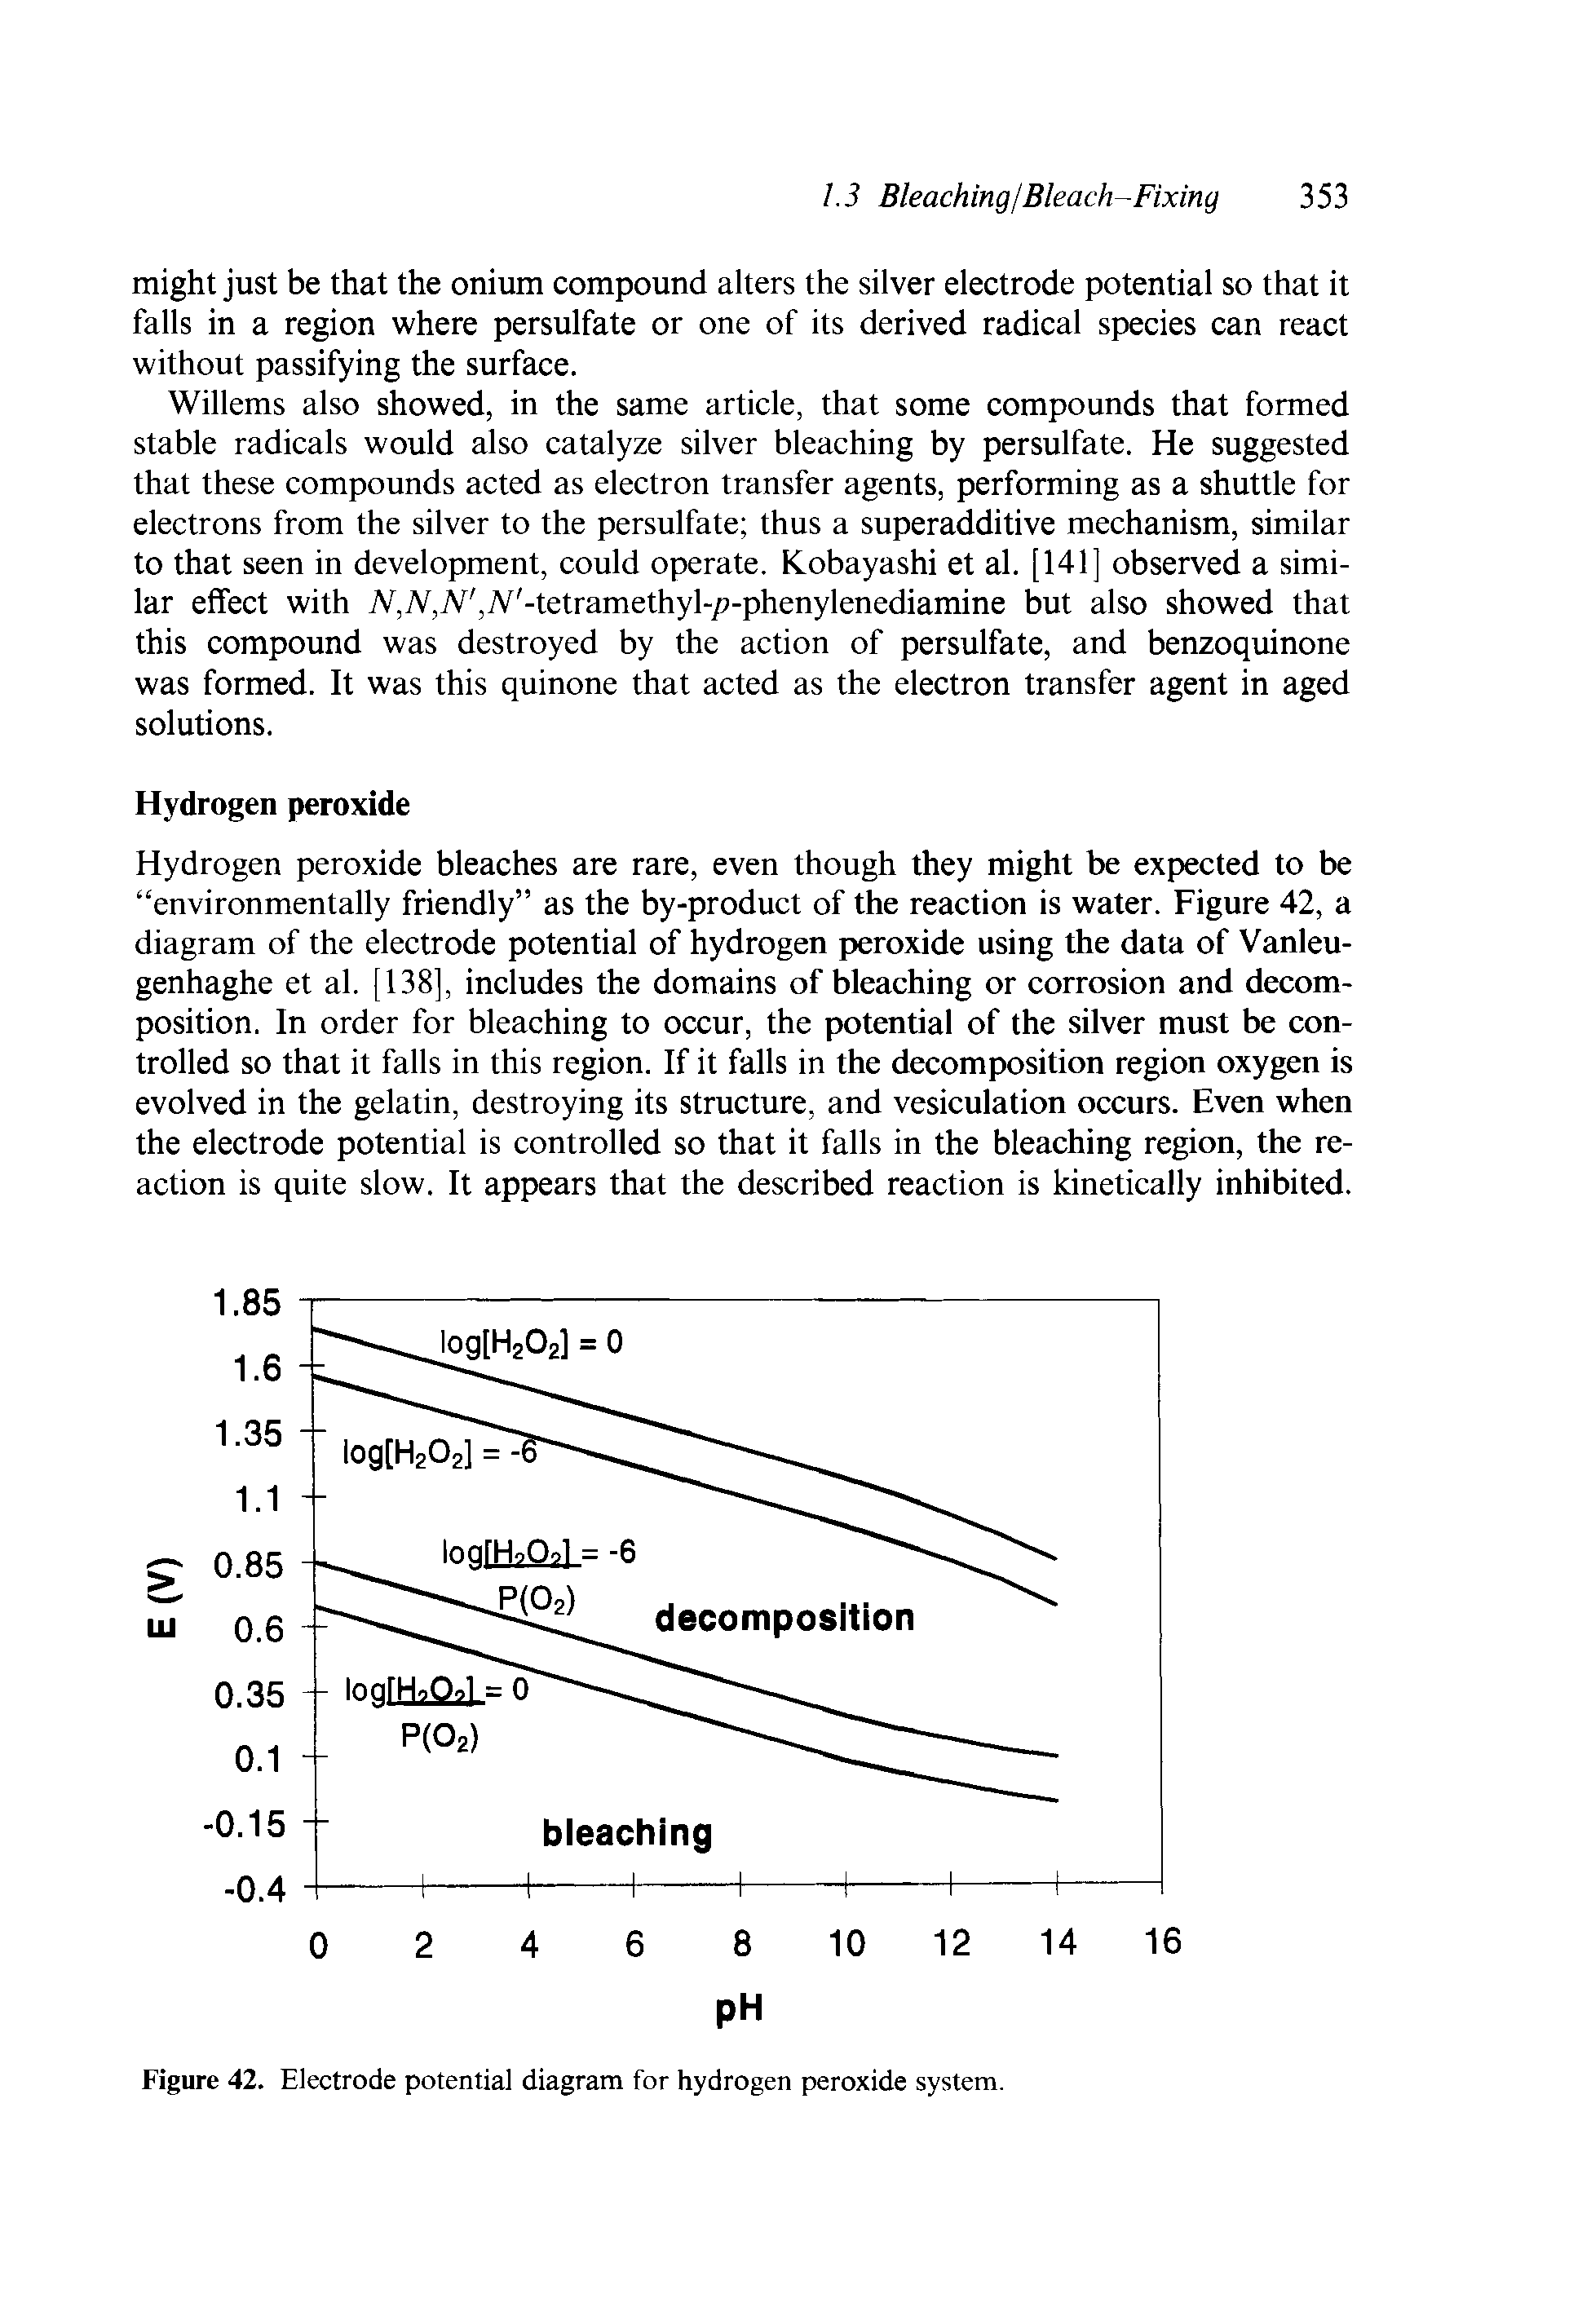 Figure 42. Electrode potential diagram for hydrogen peroxide system.